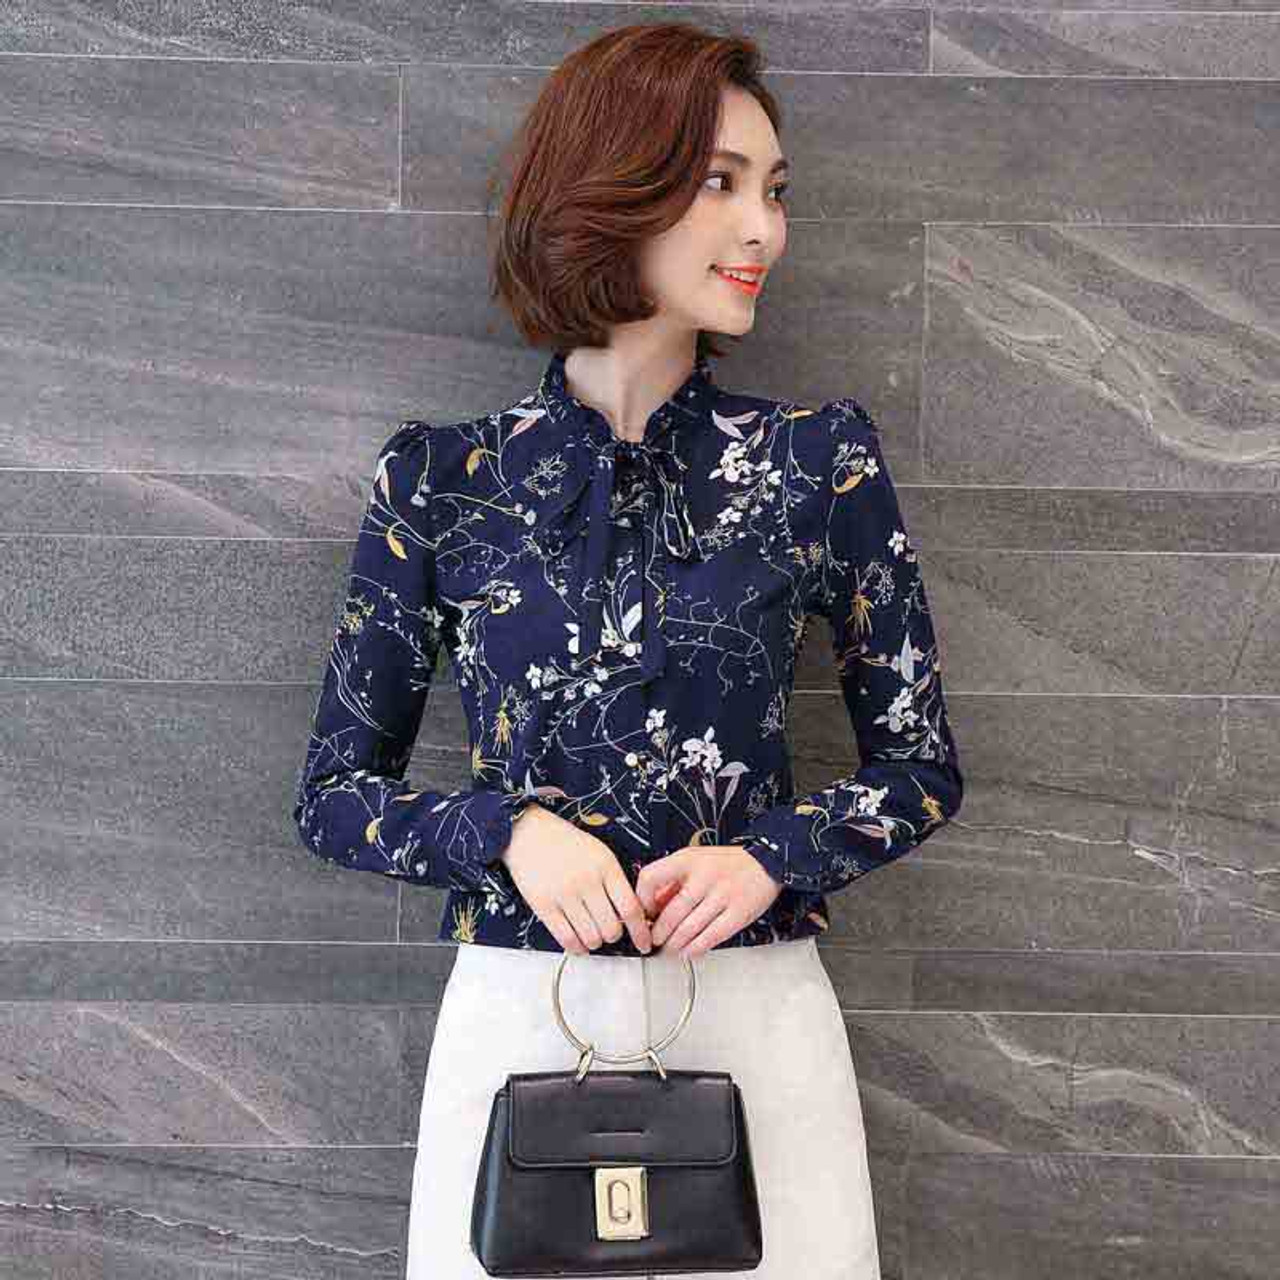 jovati Fashion Women Casual Long Sleeve Floral Print Chiffon Shirt